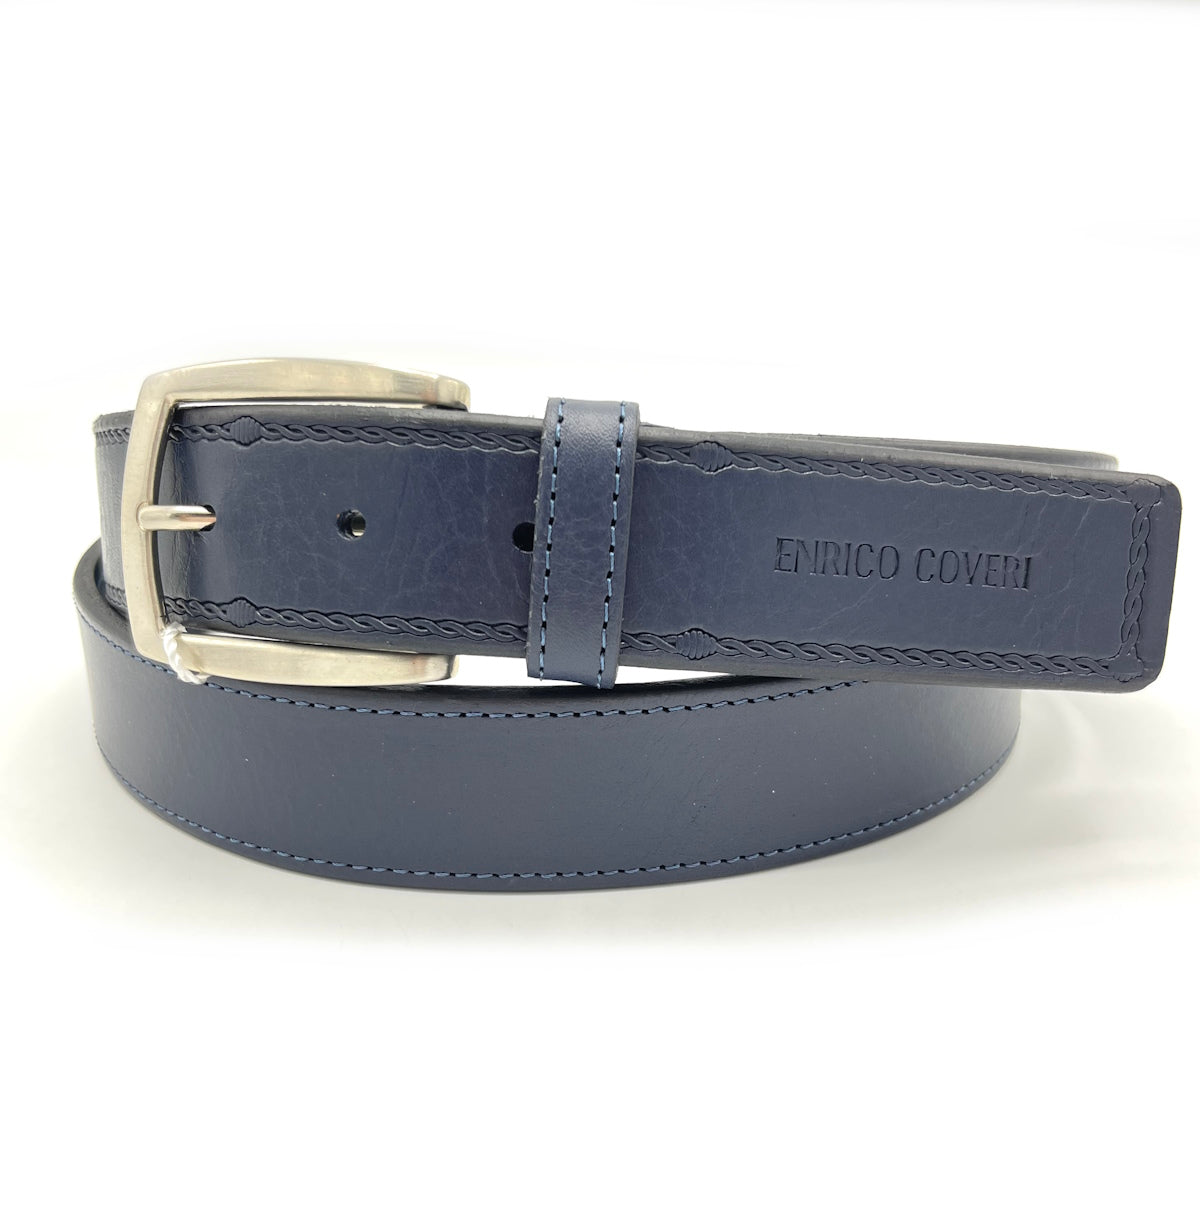 Genuine leather belt, Handmade in Italy, Brand Enrico Coveri, art. EC3507